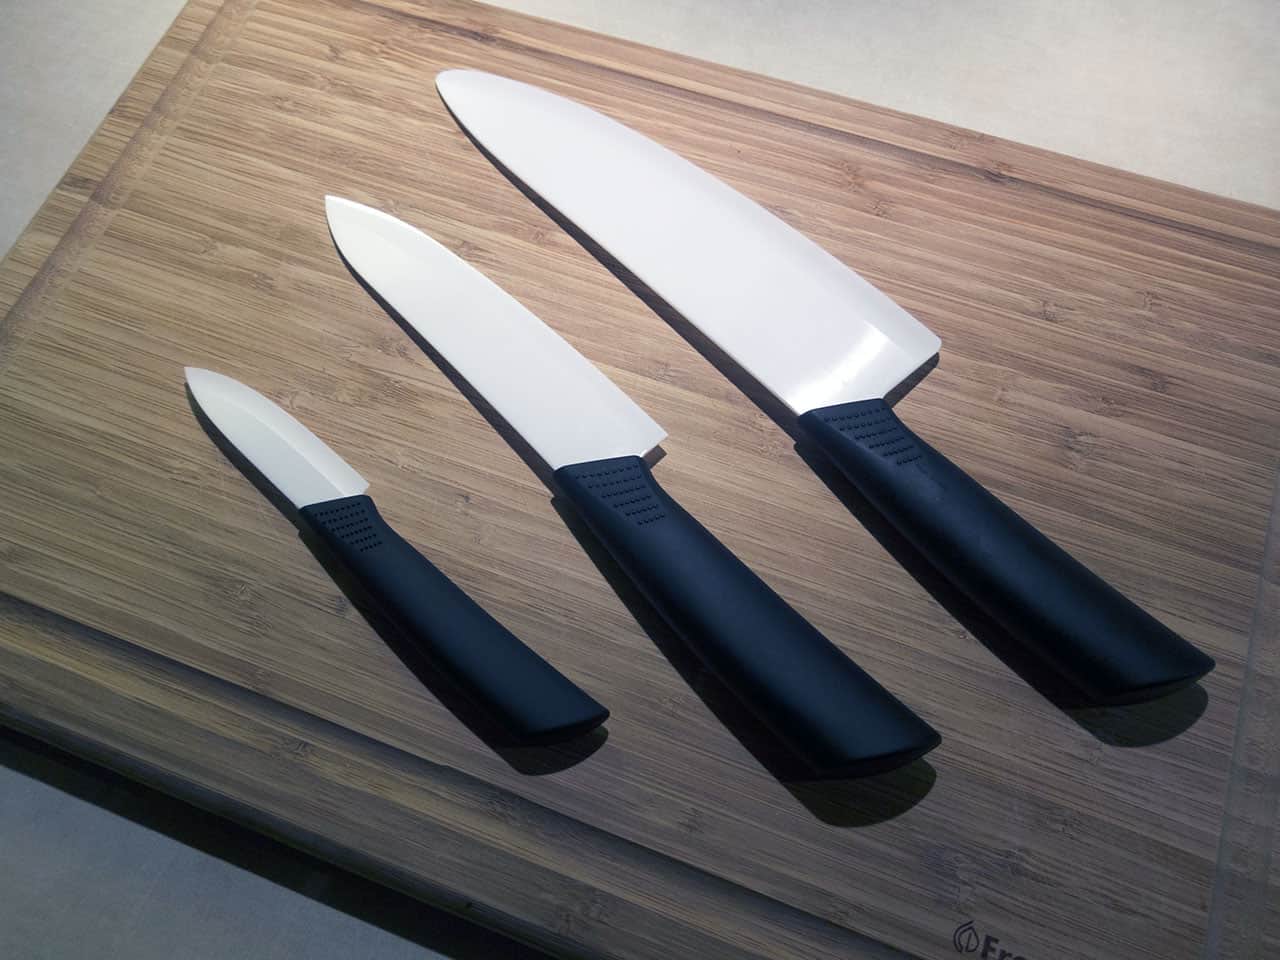 chefs foundry p600 knife set